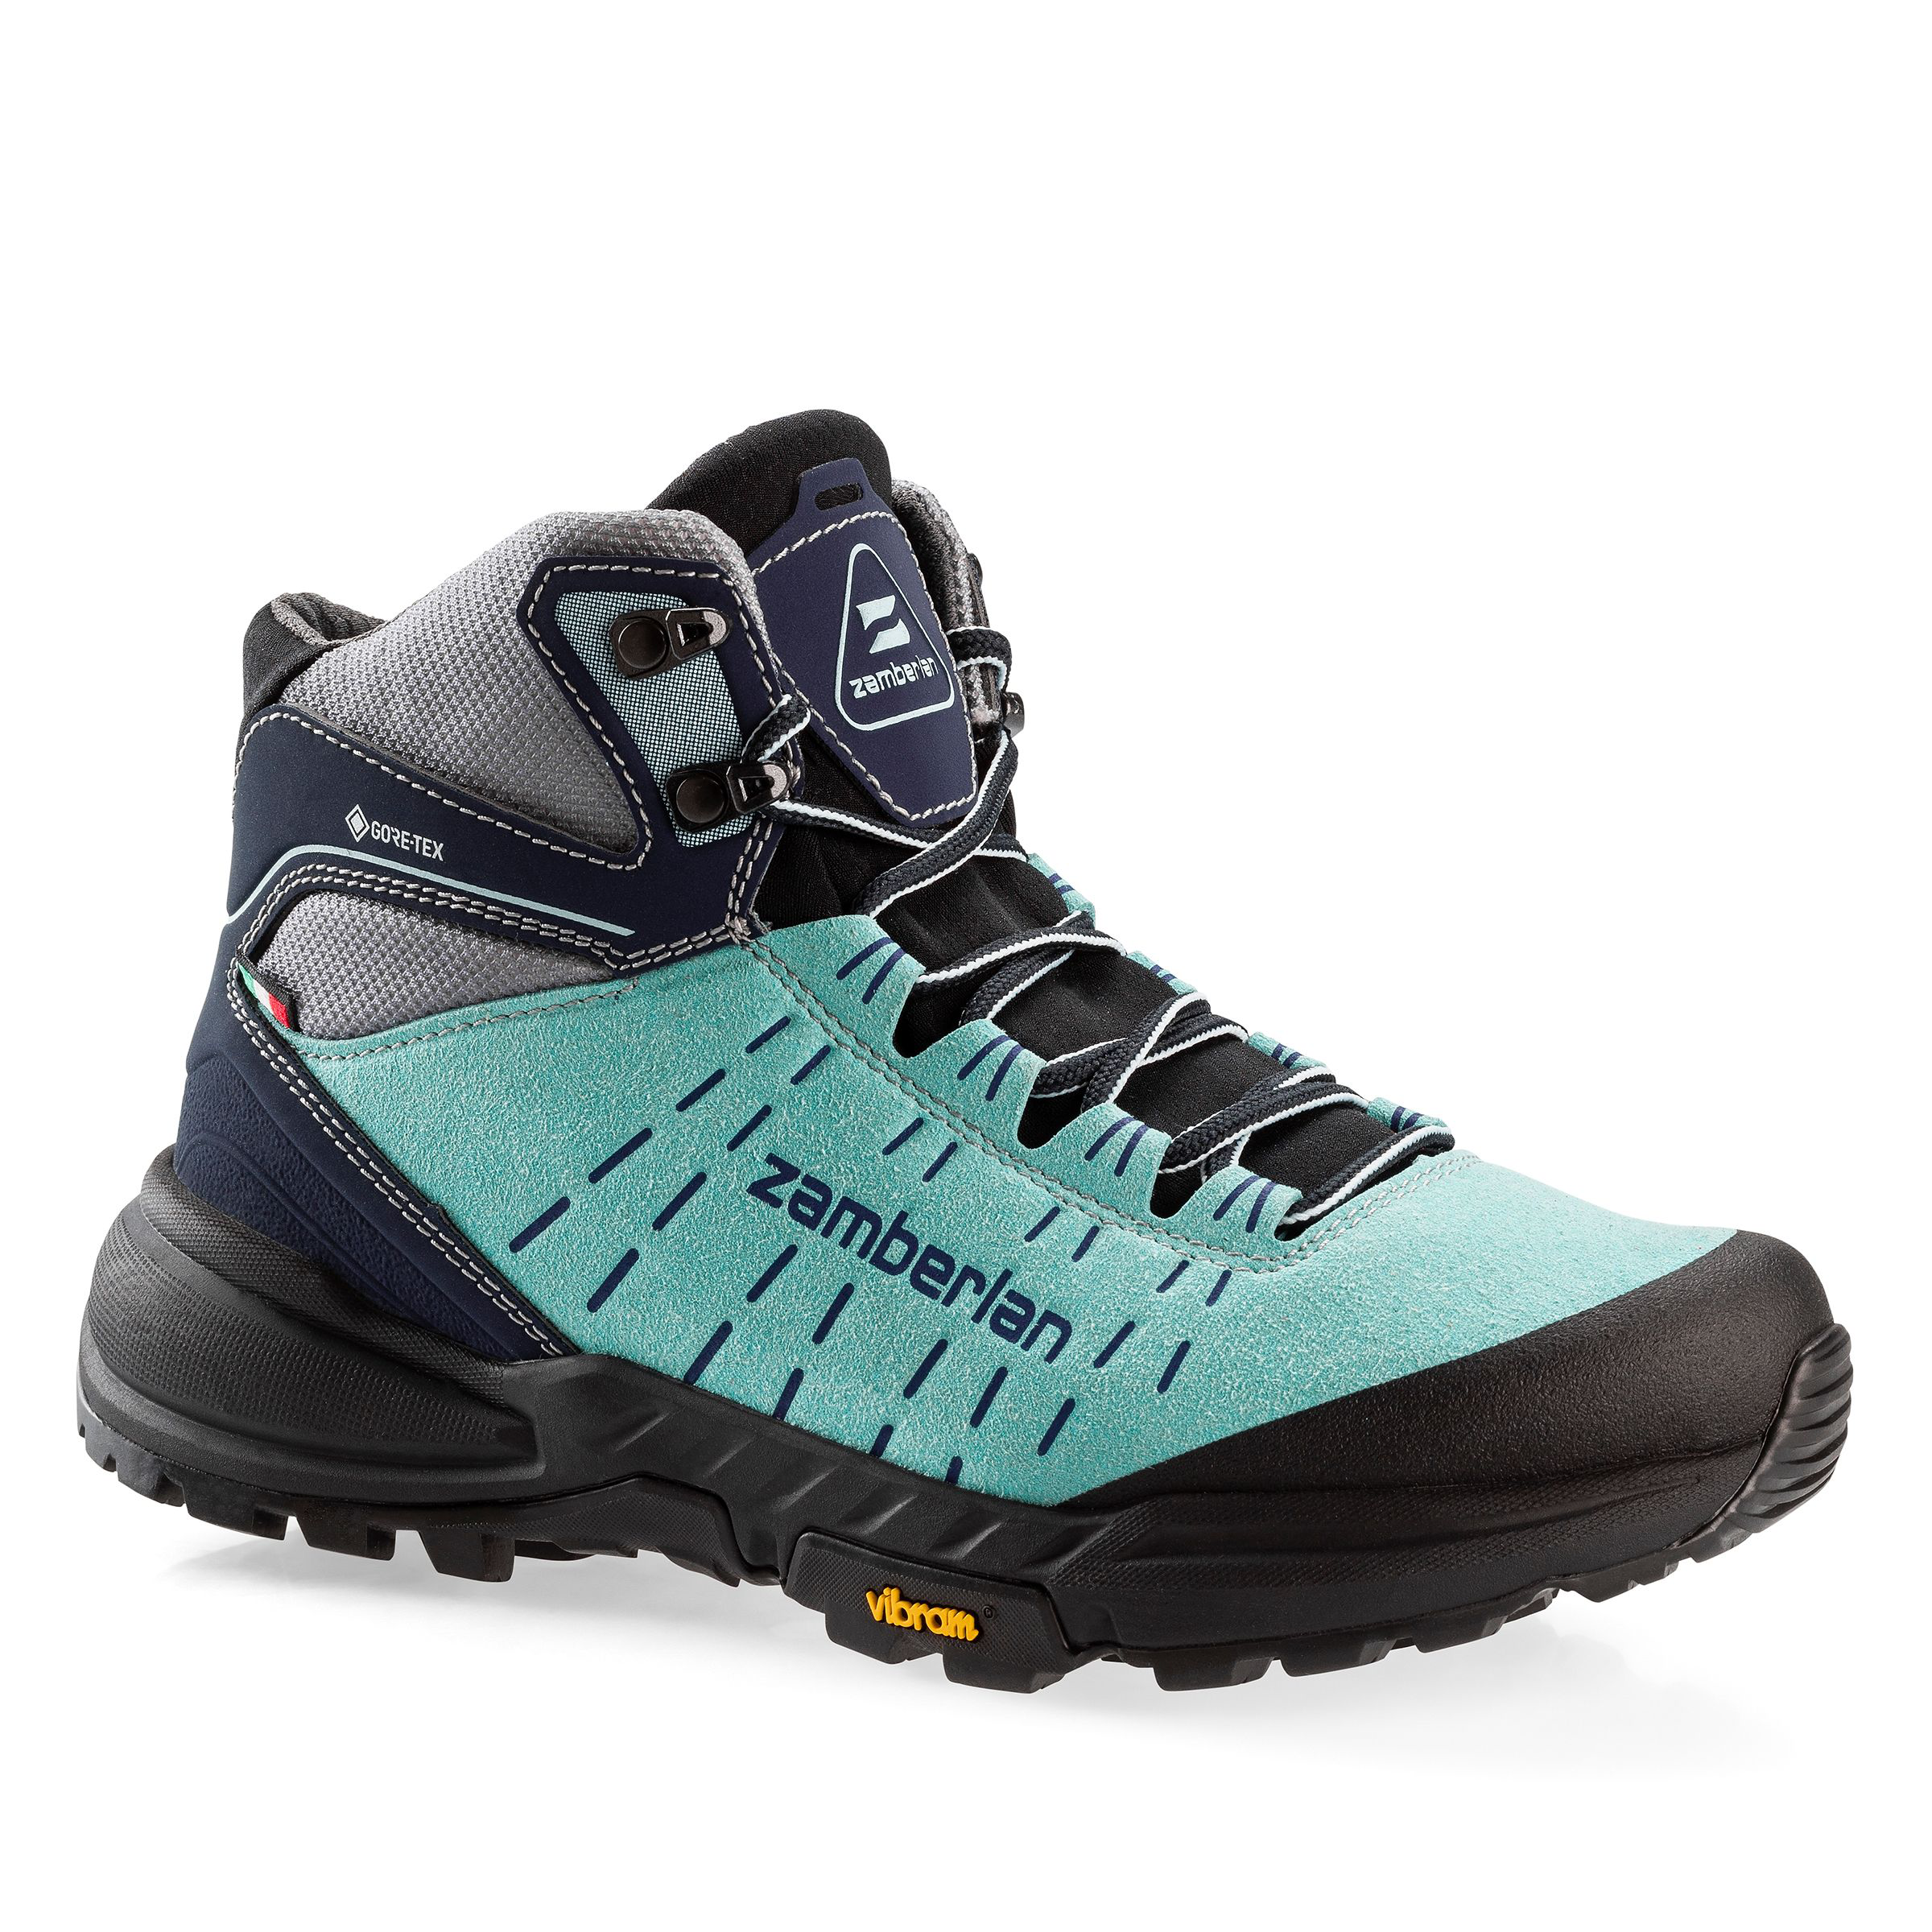 Zamberlan 334 Circe GTX Waterproof Hiking Boots for Ladies - Blue - 8M